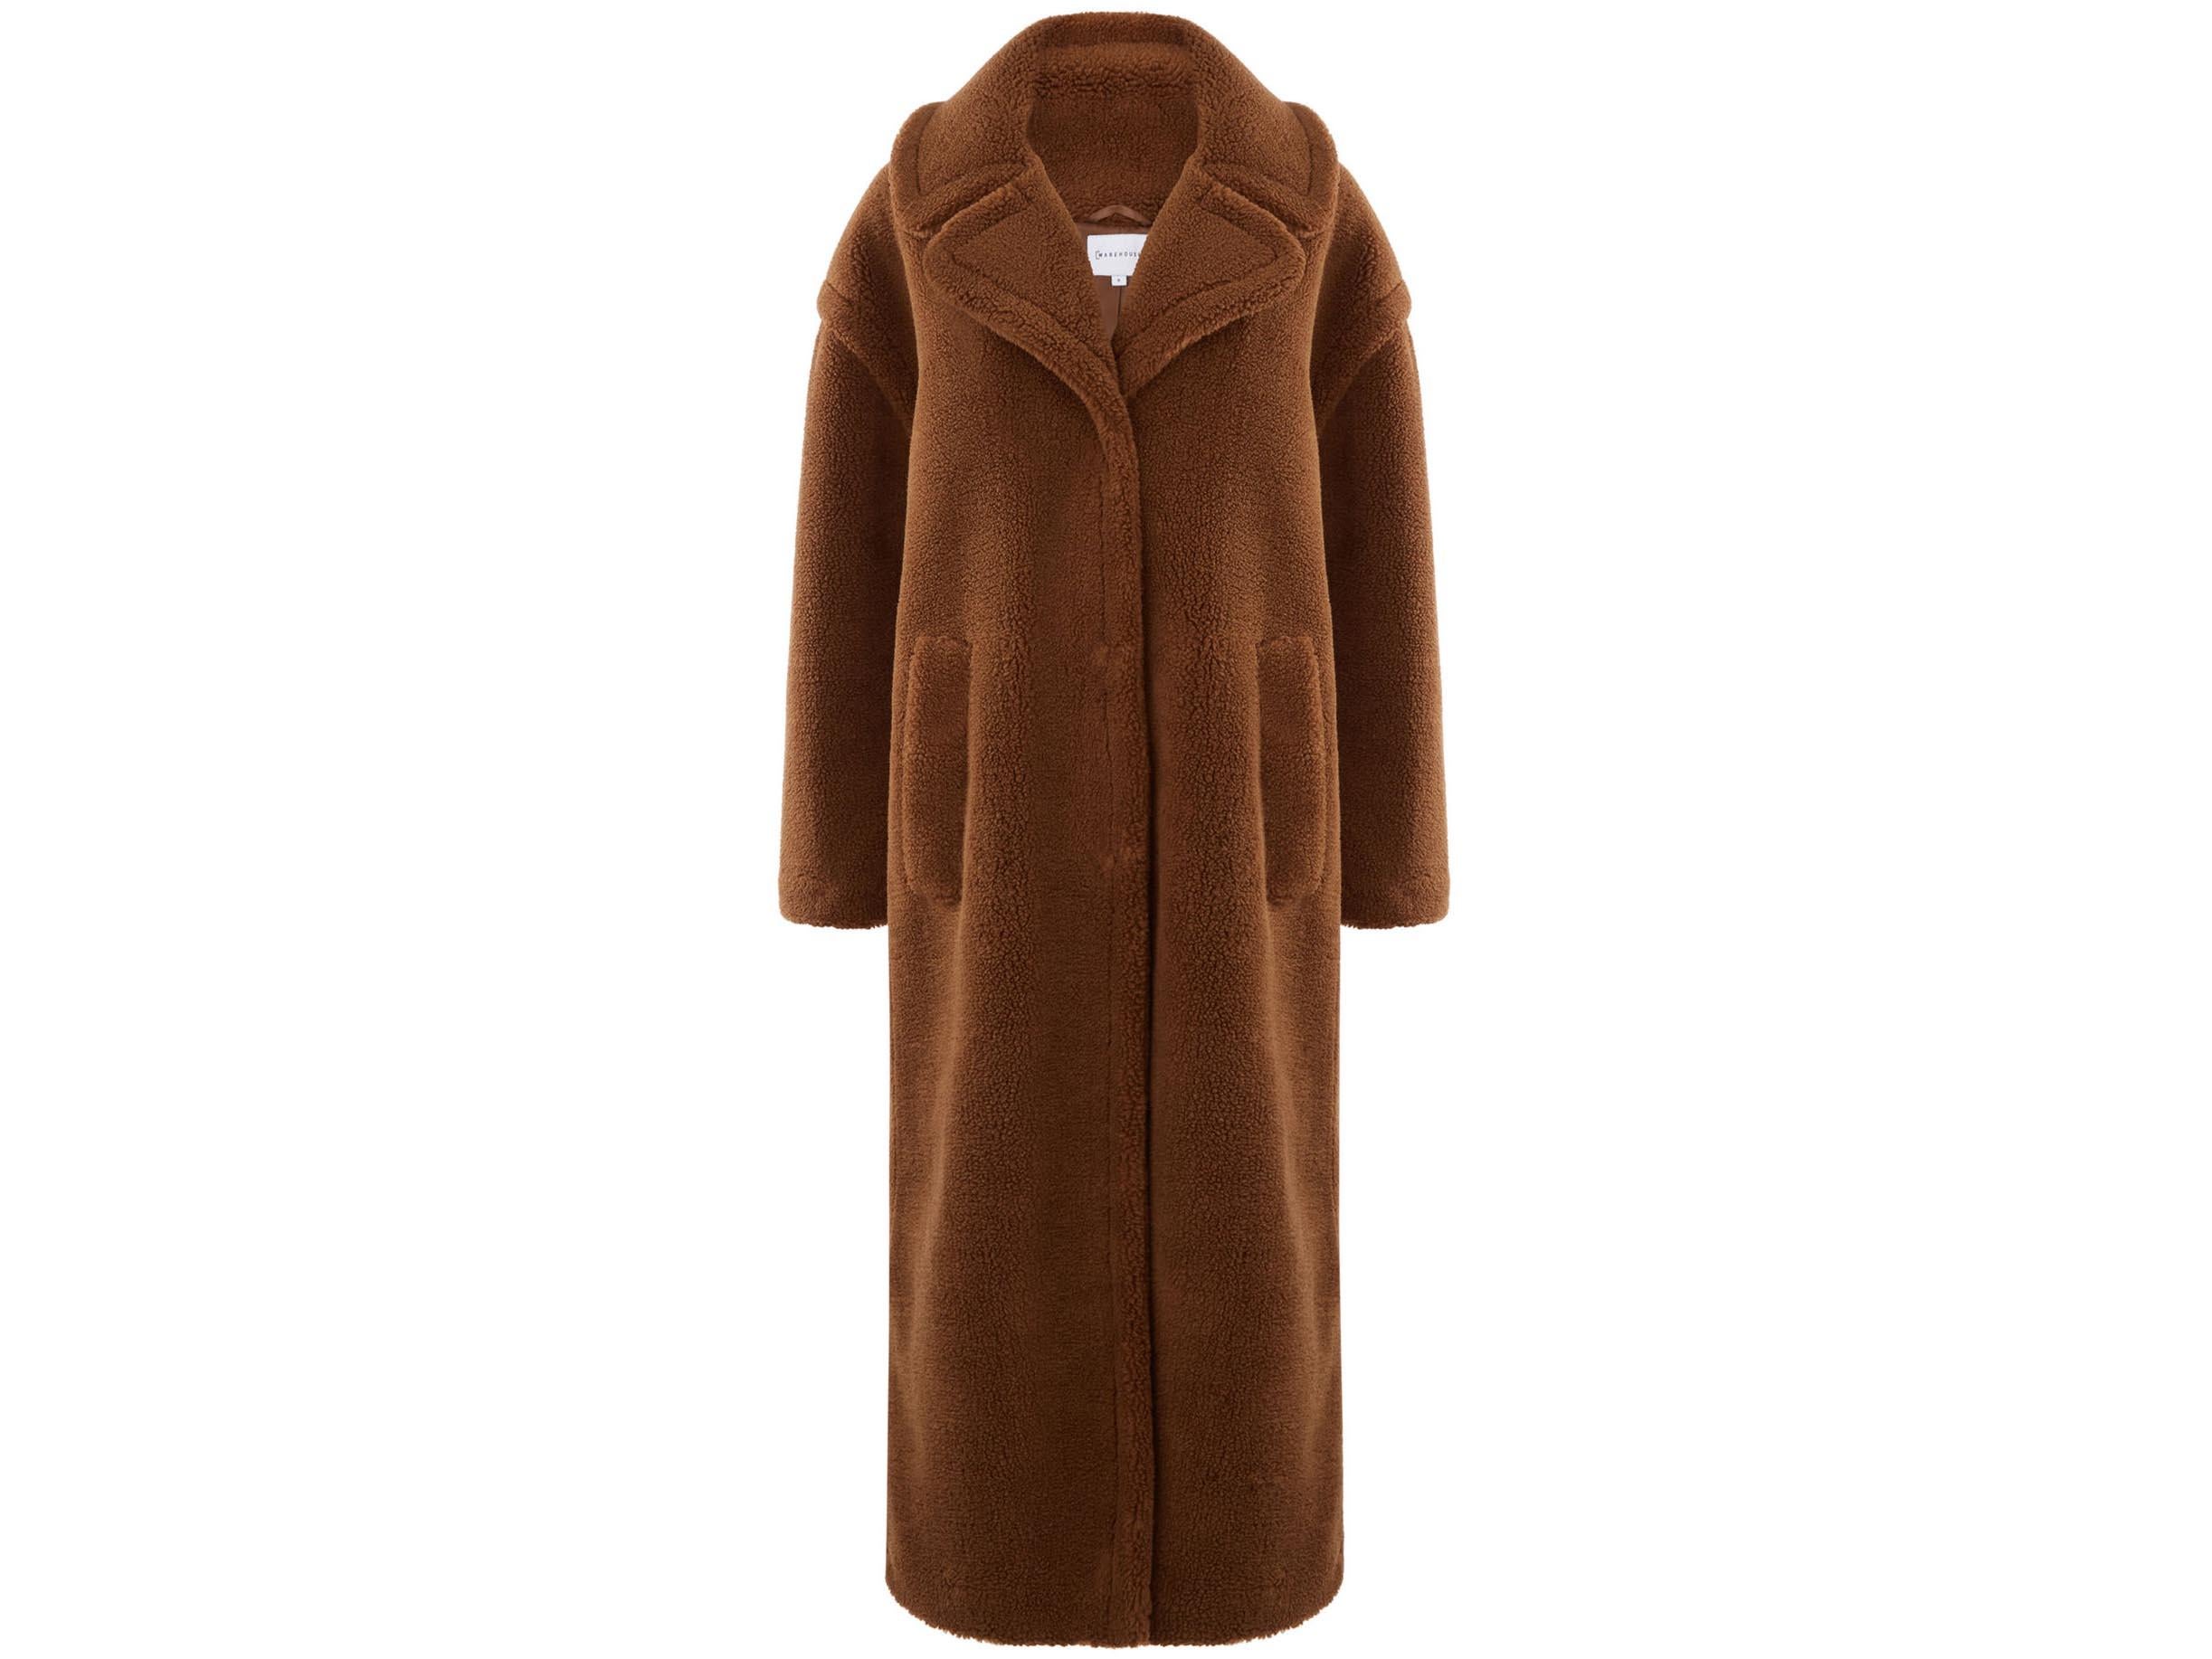 Maxi Faux Fur Coat, £99, Warehouse